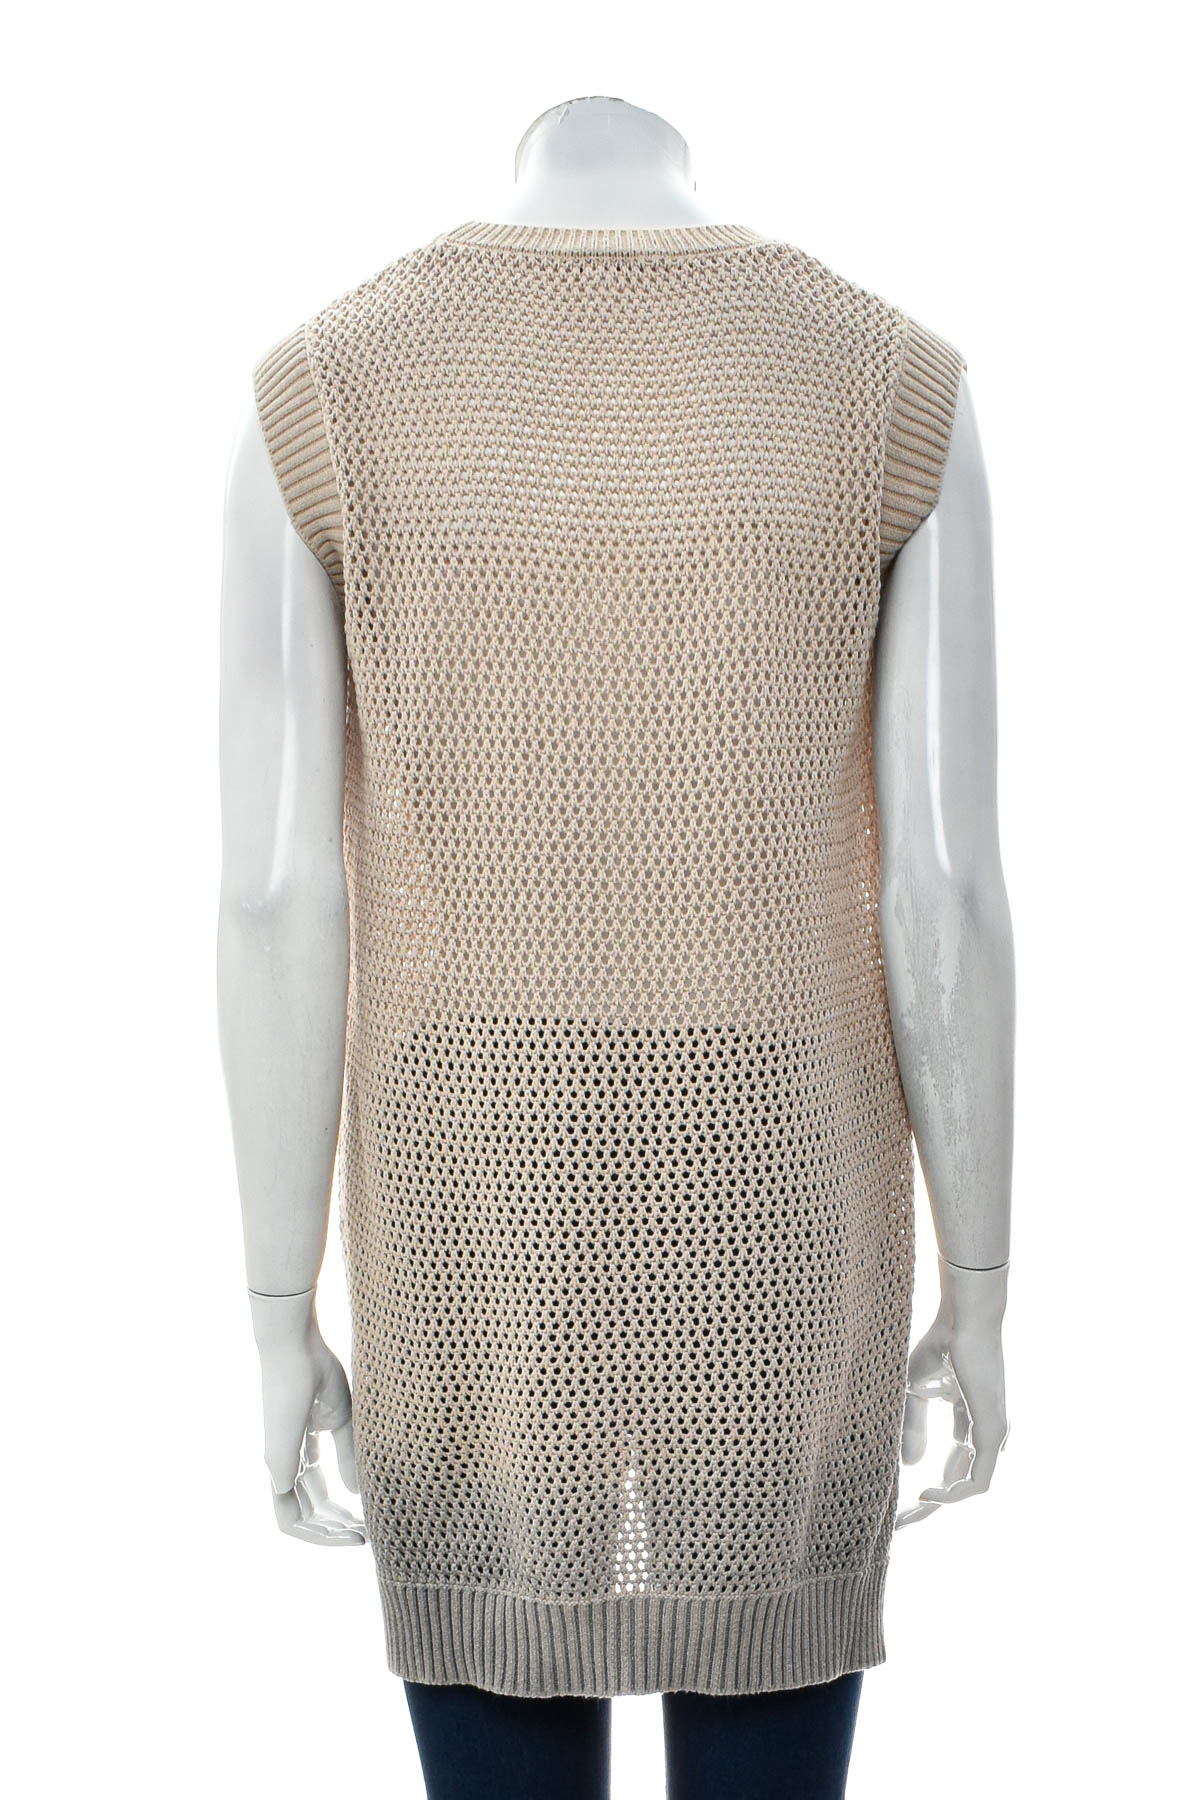 Women's sweater - Alba Moda - 1